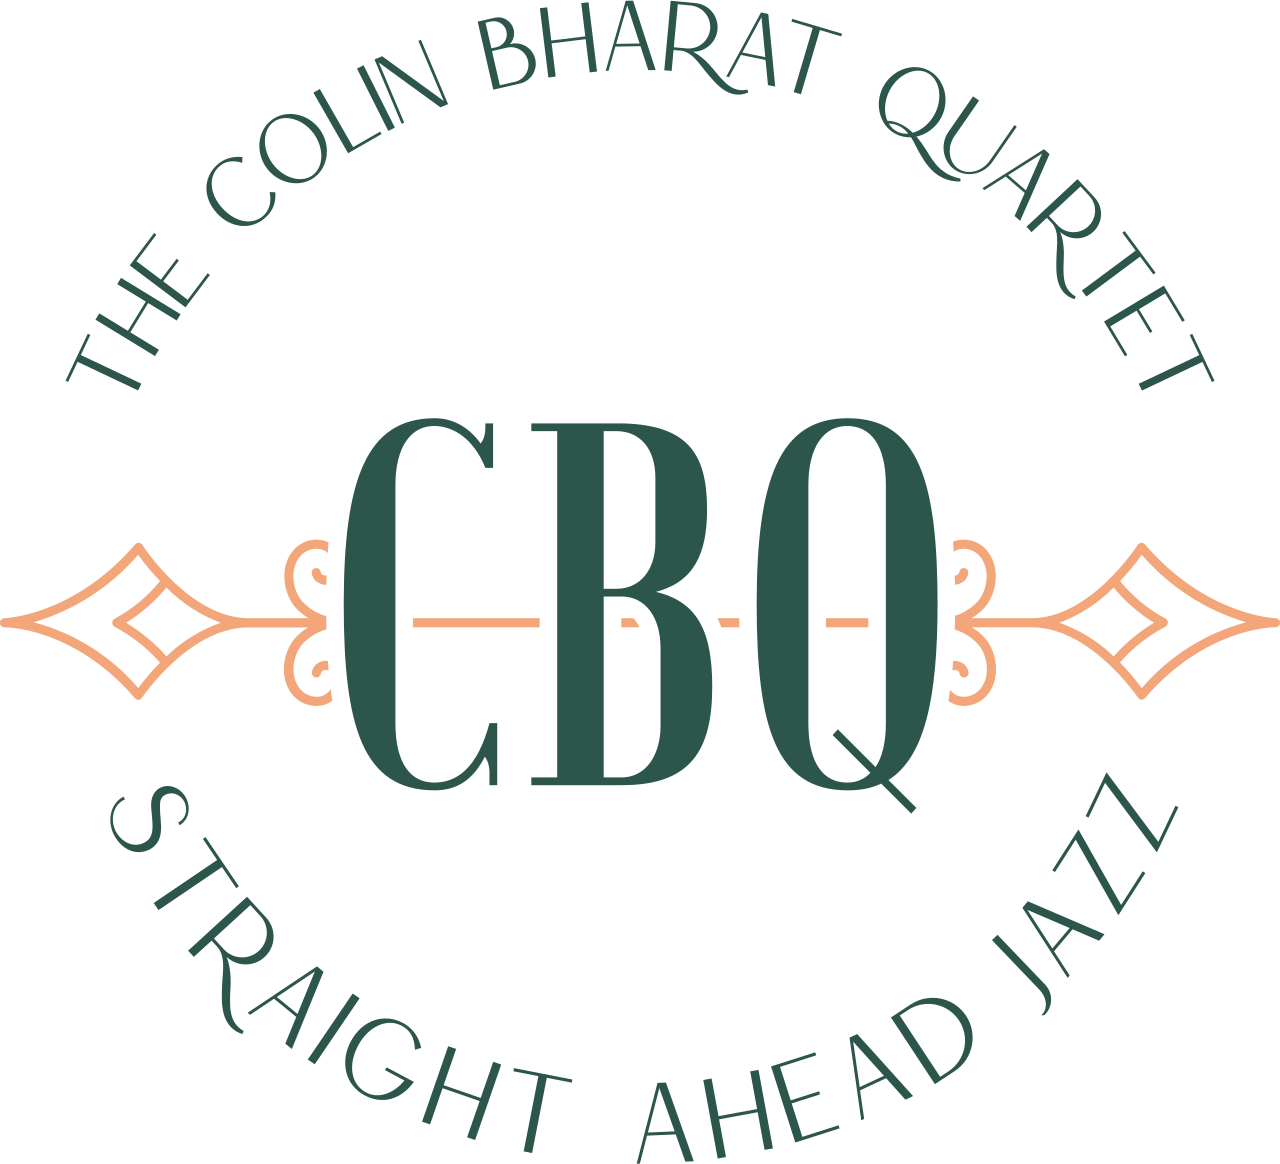 THE COLIN BHARAT QUARTET's logo